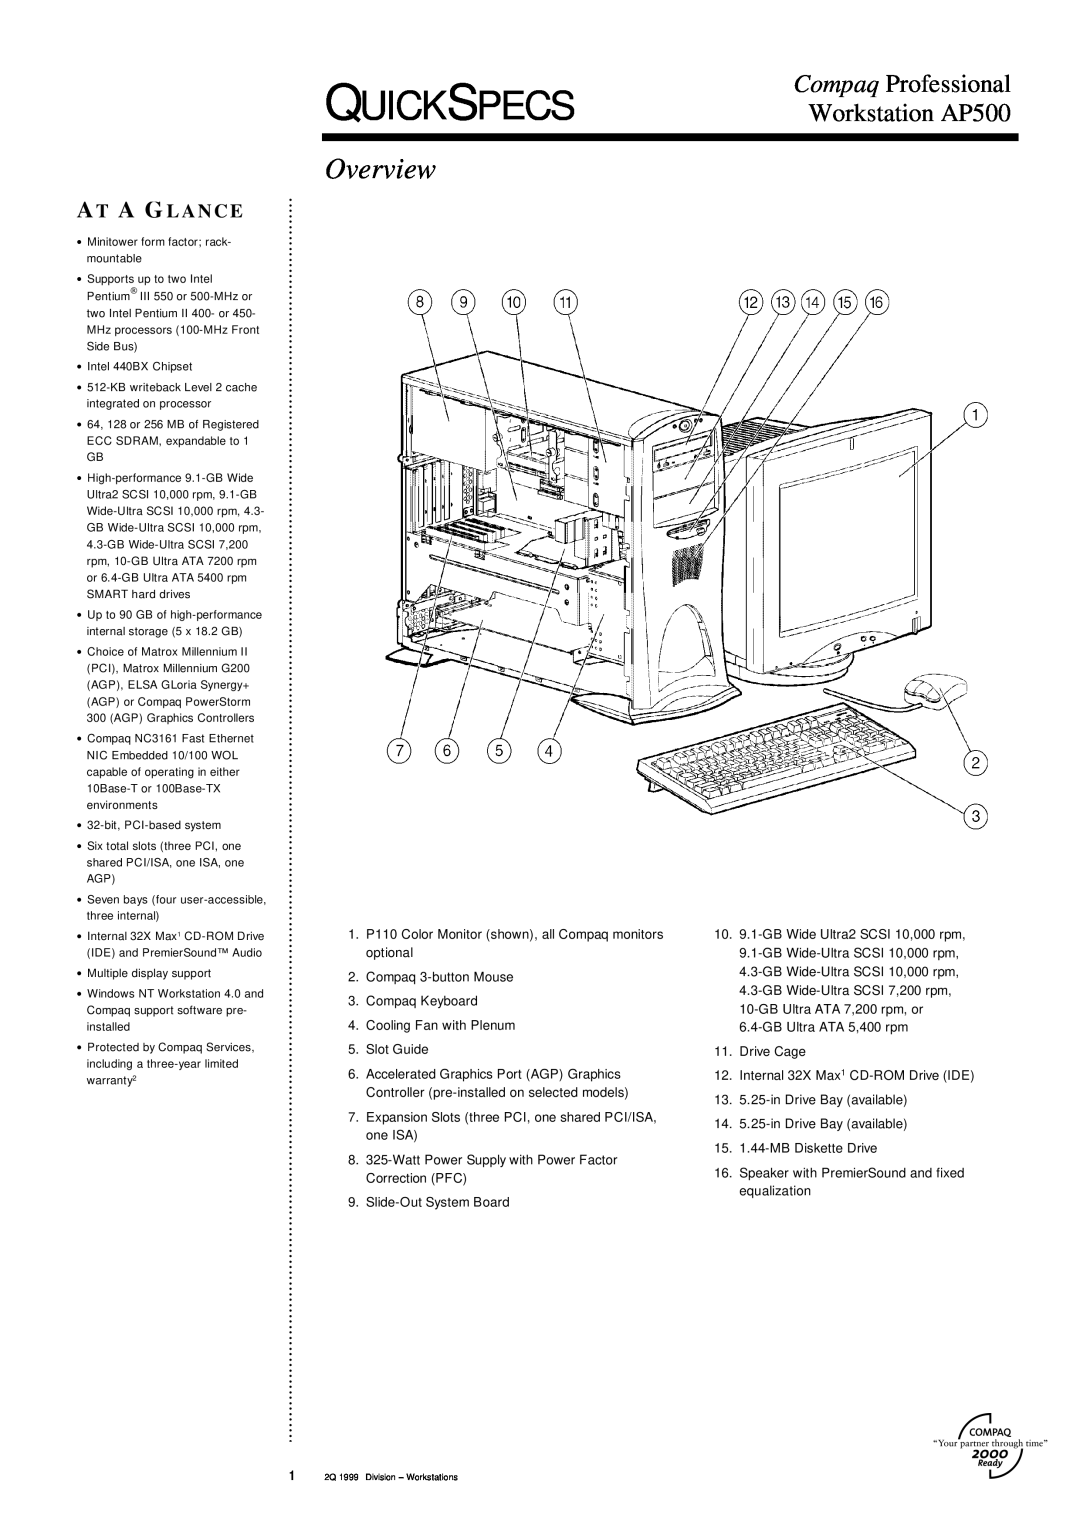 Compac Industries warranty Quickspecs, Overview, Workstation AP500, Compaq Professional, A T A G L A N C E 